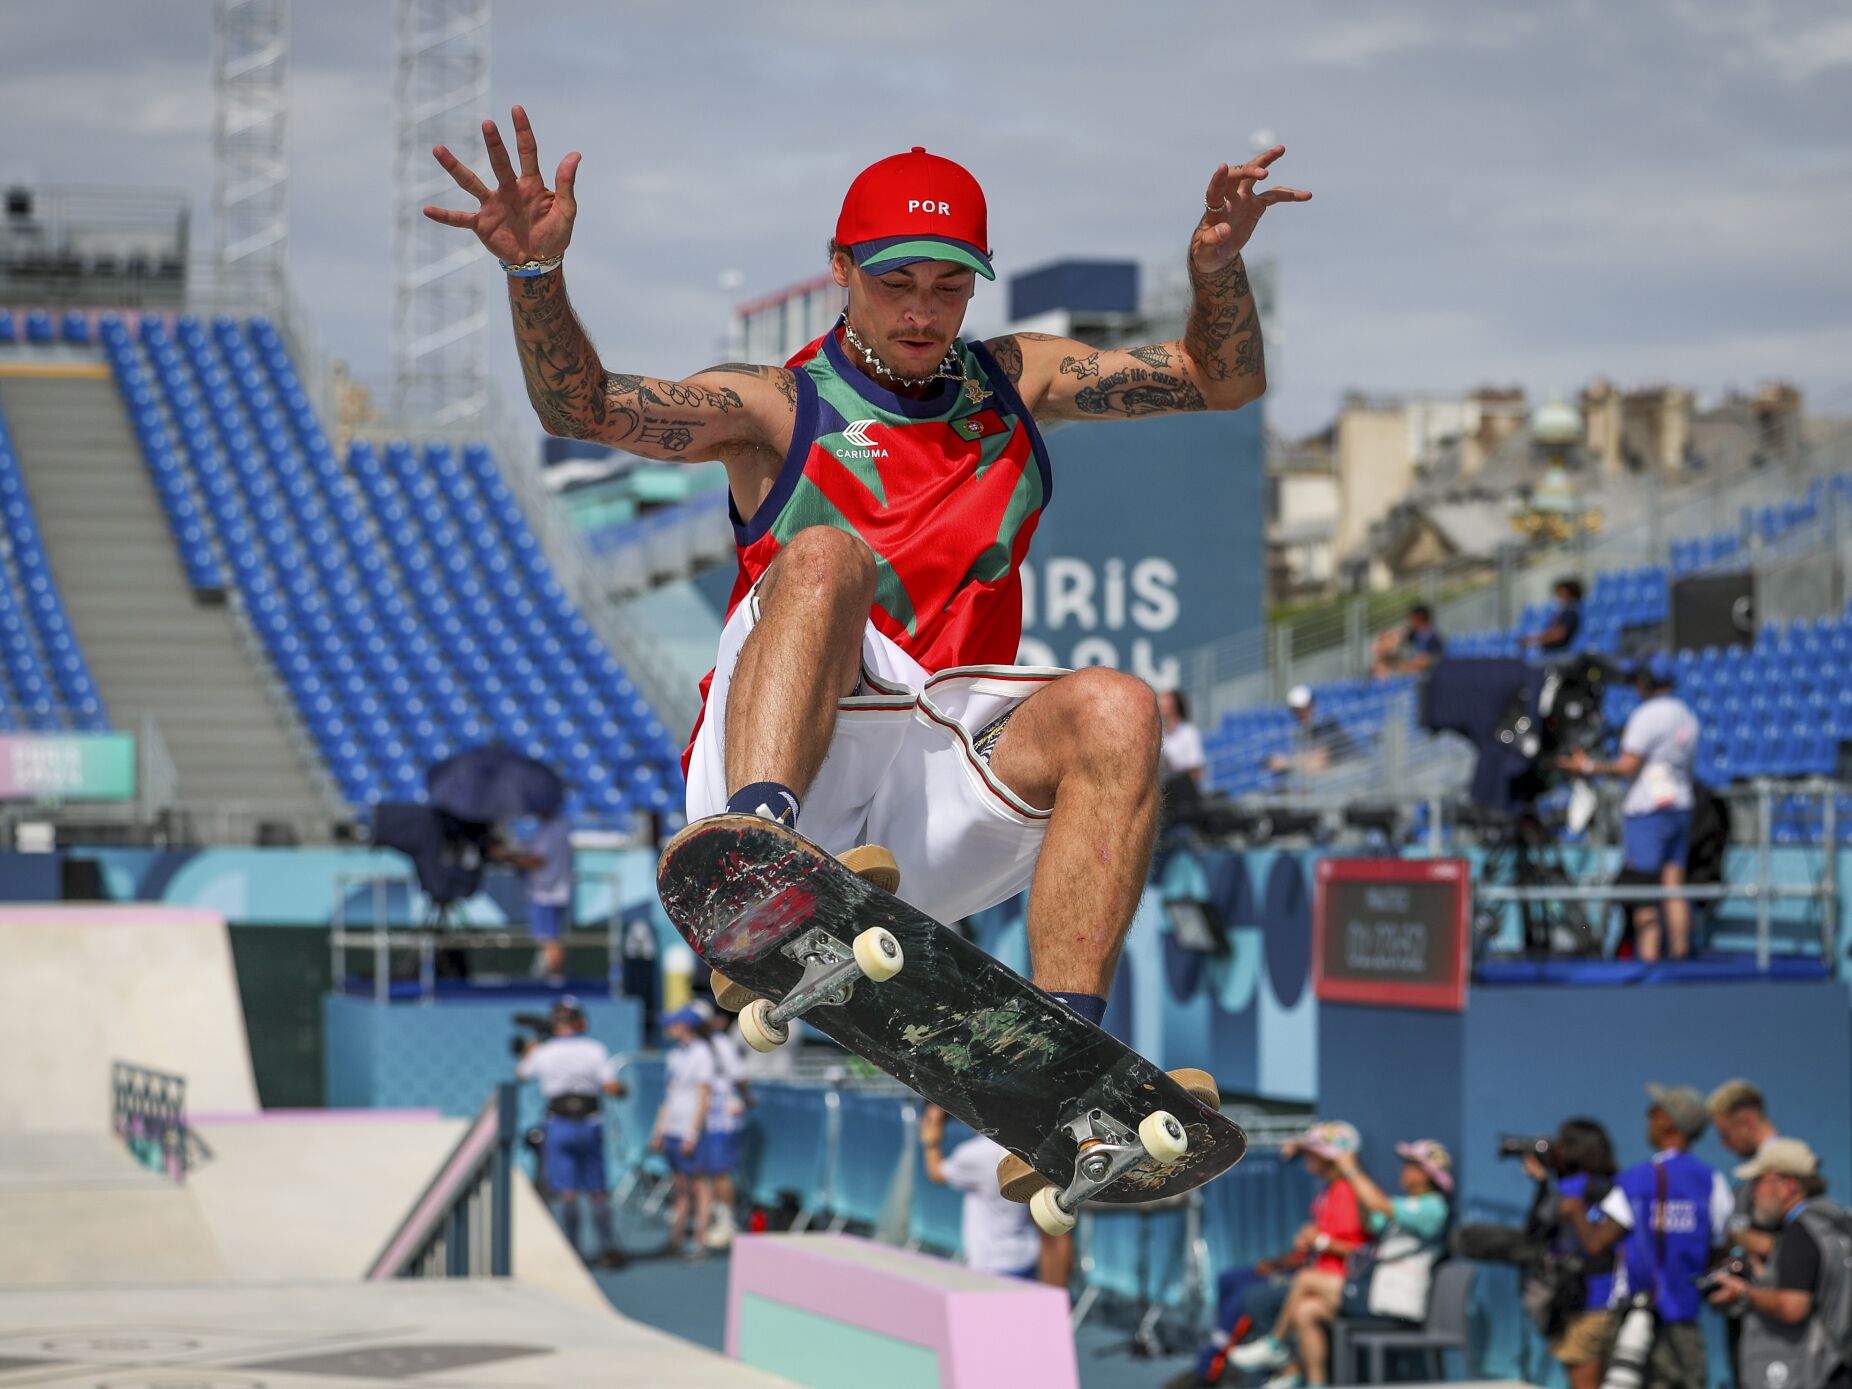 Skater Gustavo Ribeiro falha final de street, mas deixa garantia: "Nada acaba aqui"